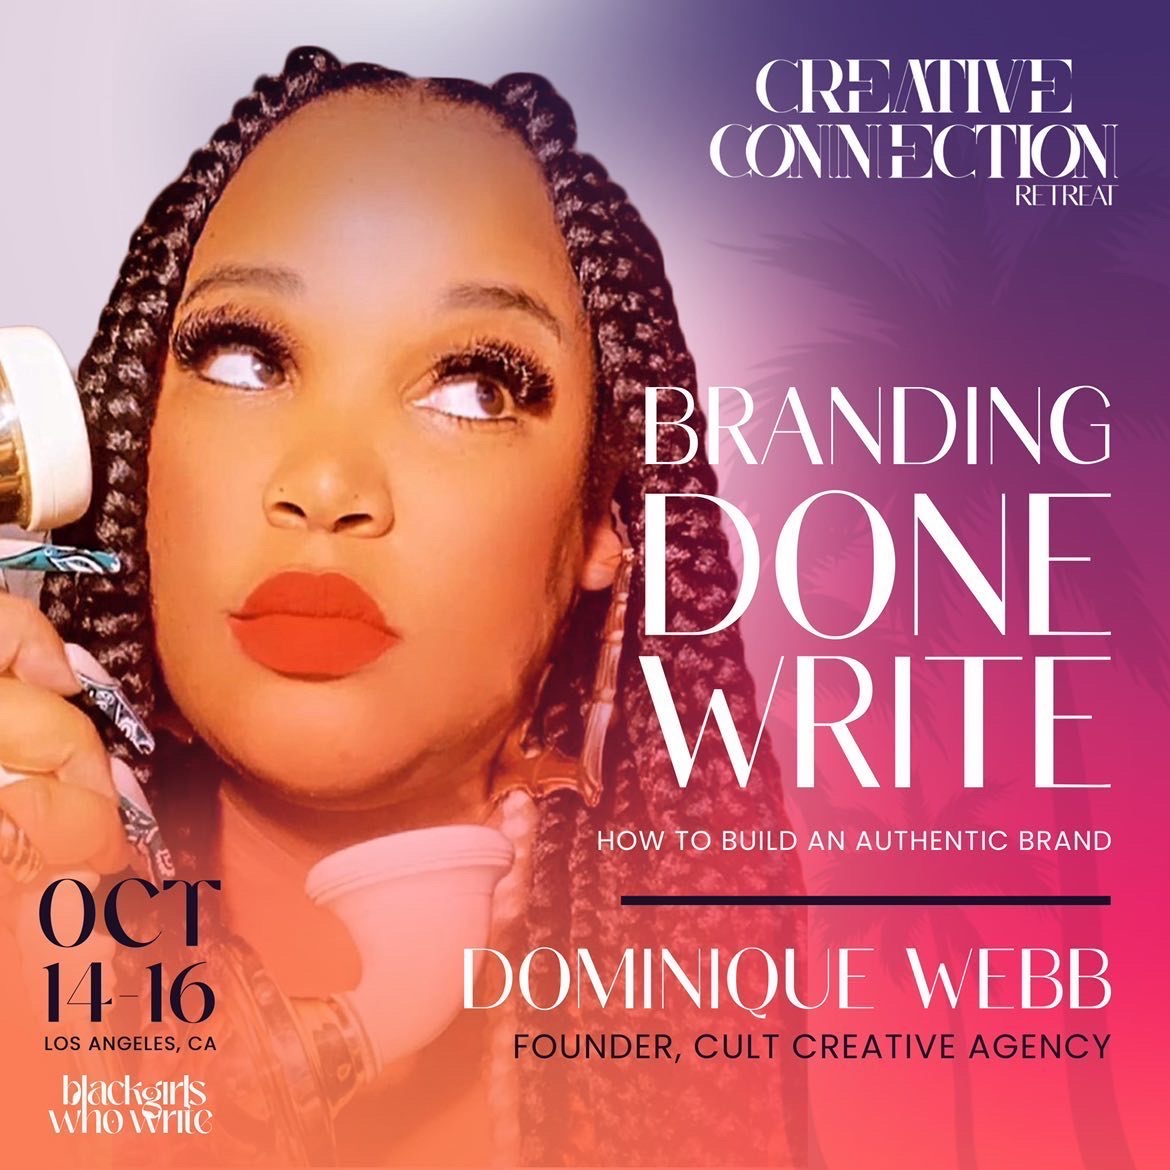 Black Girls Who Write: Creative Connection Retreat